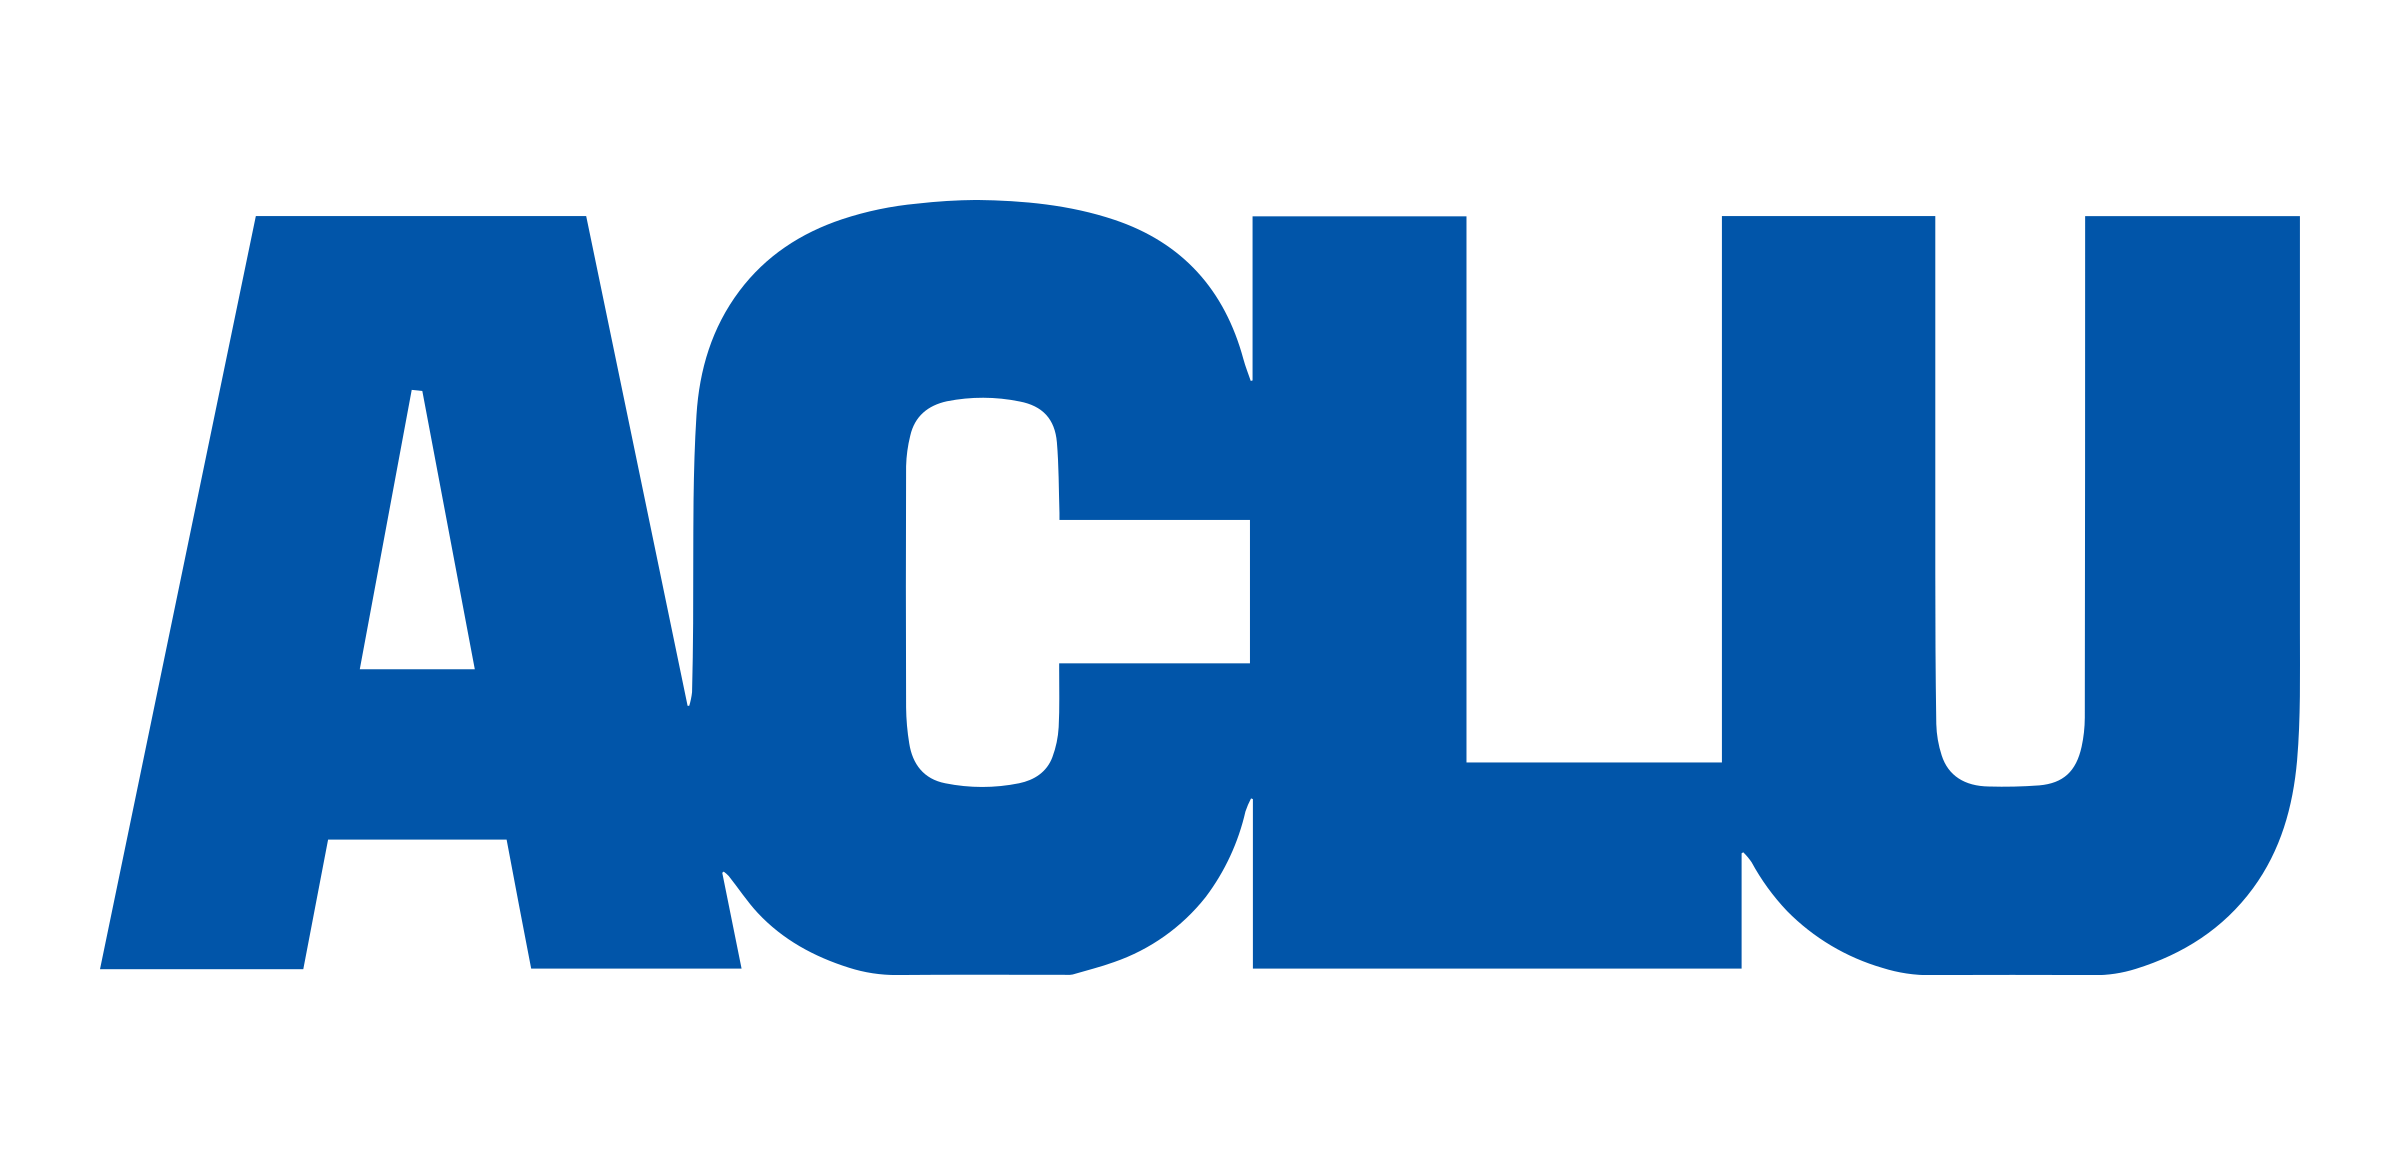 ACLU Logo - ACLU Logo PNG Transparent & SVG Vector - Freebie Supply